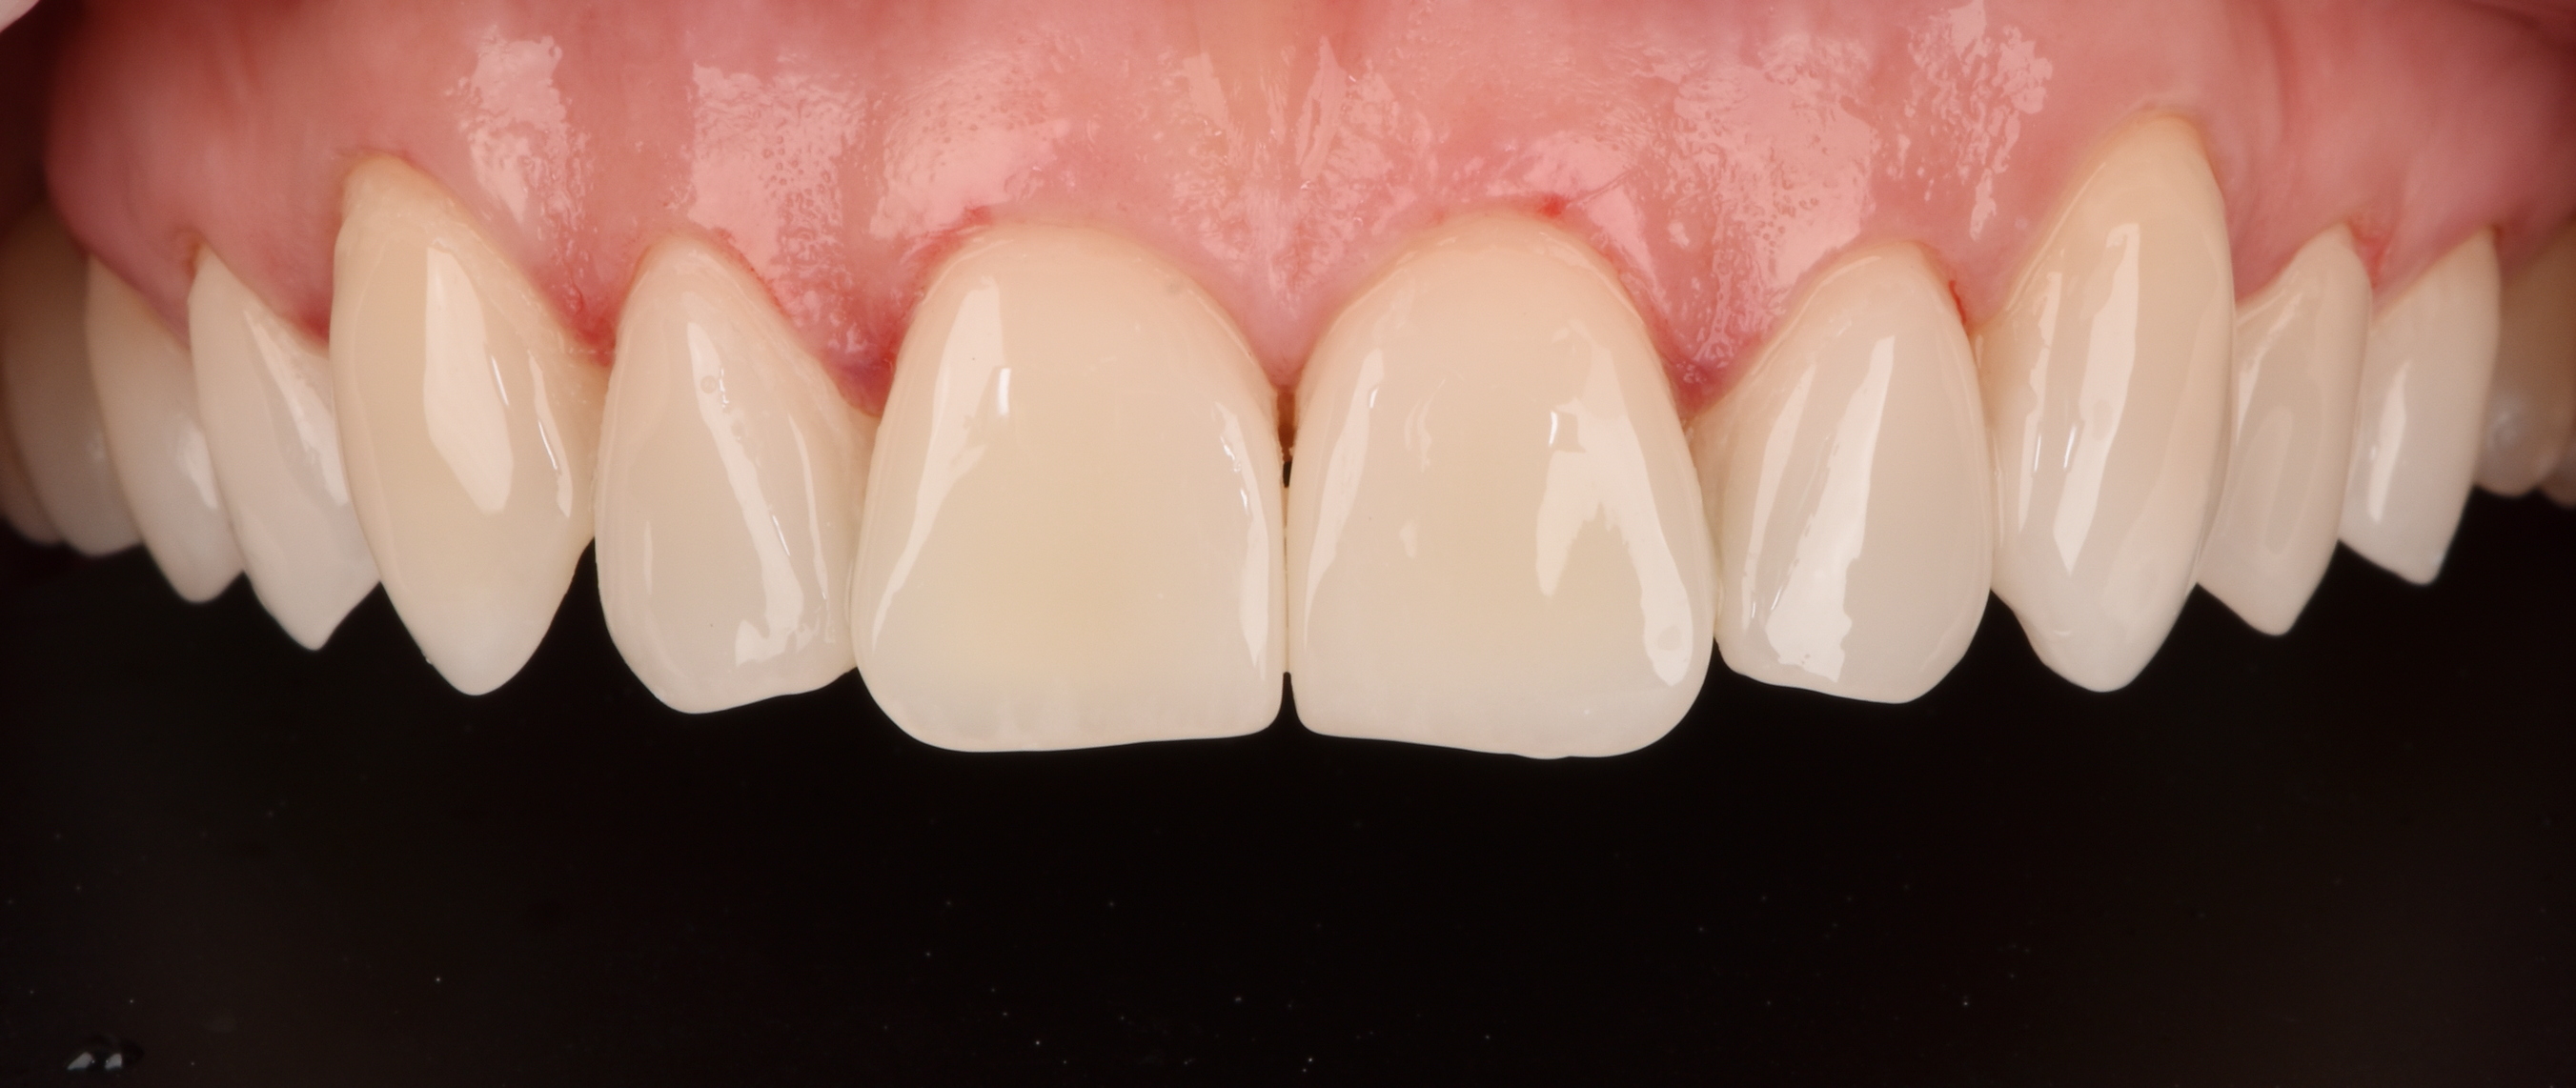 Композитная реставрация 6 зуба. Цифровой дизайн улыбки DSD. Реставрация причины